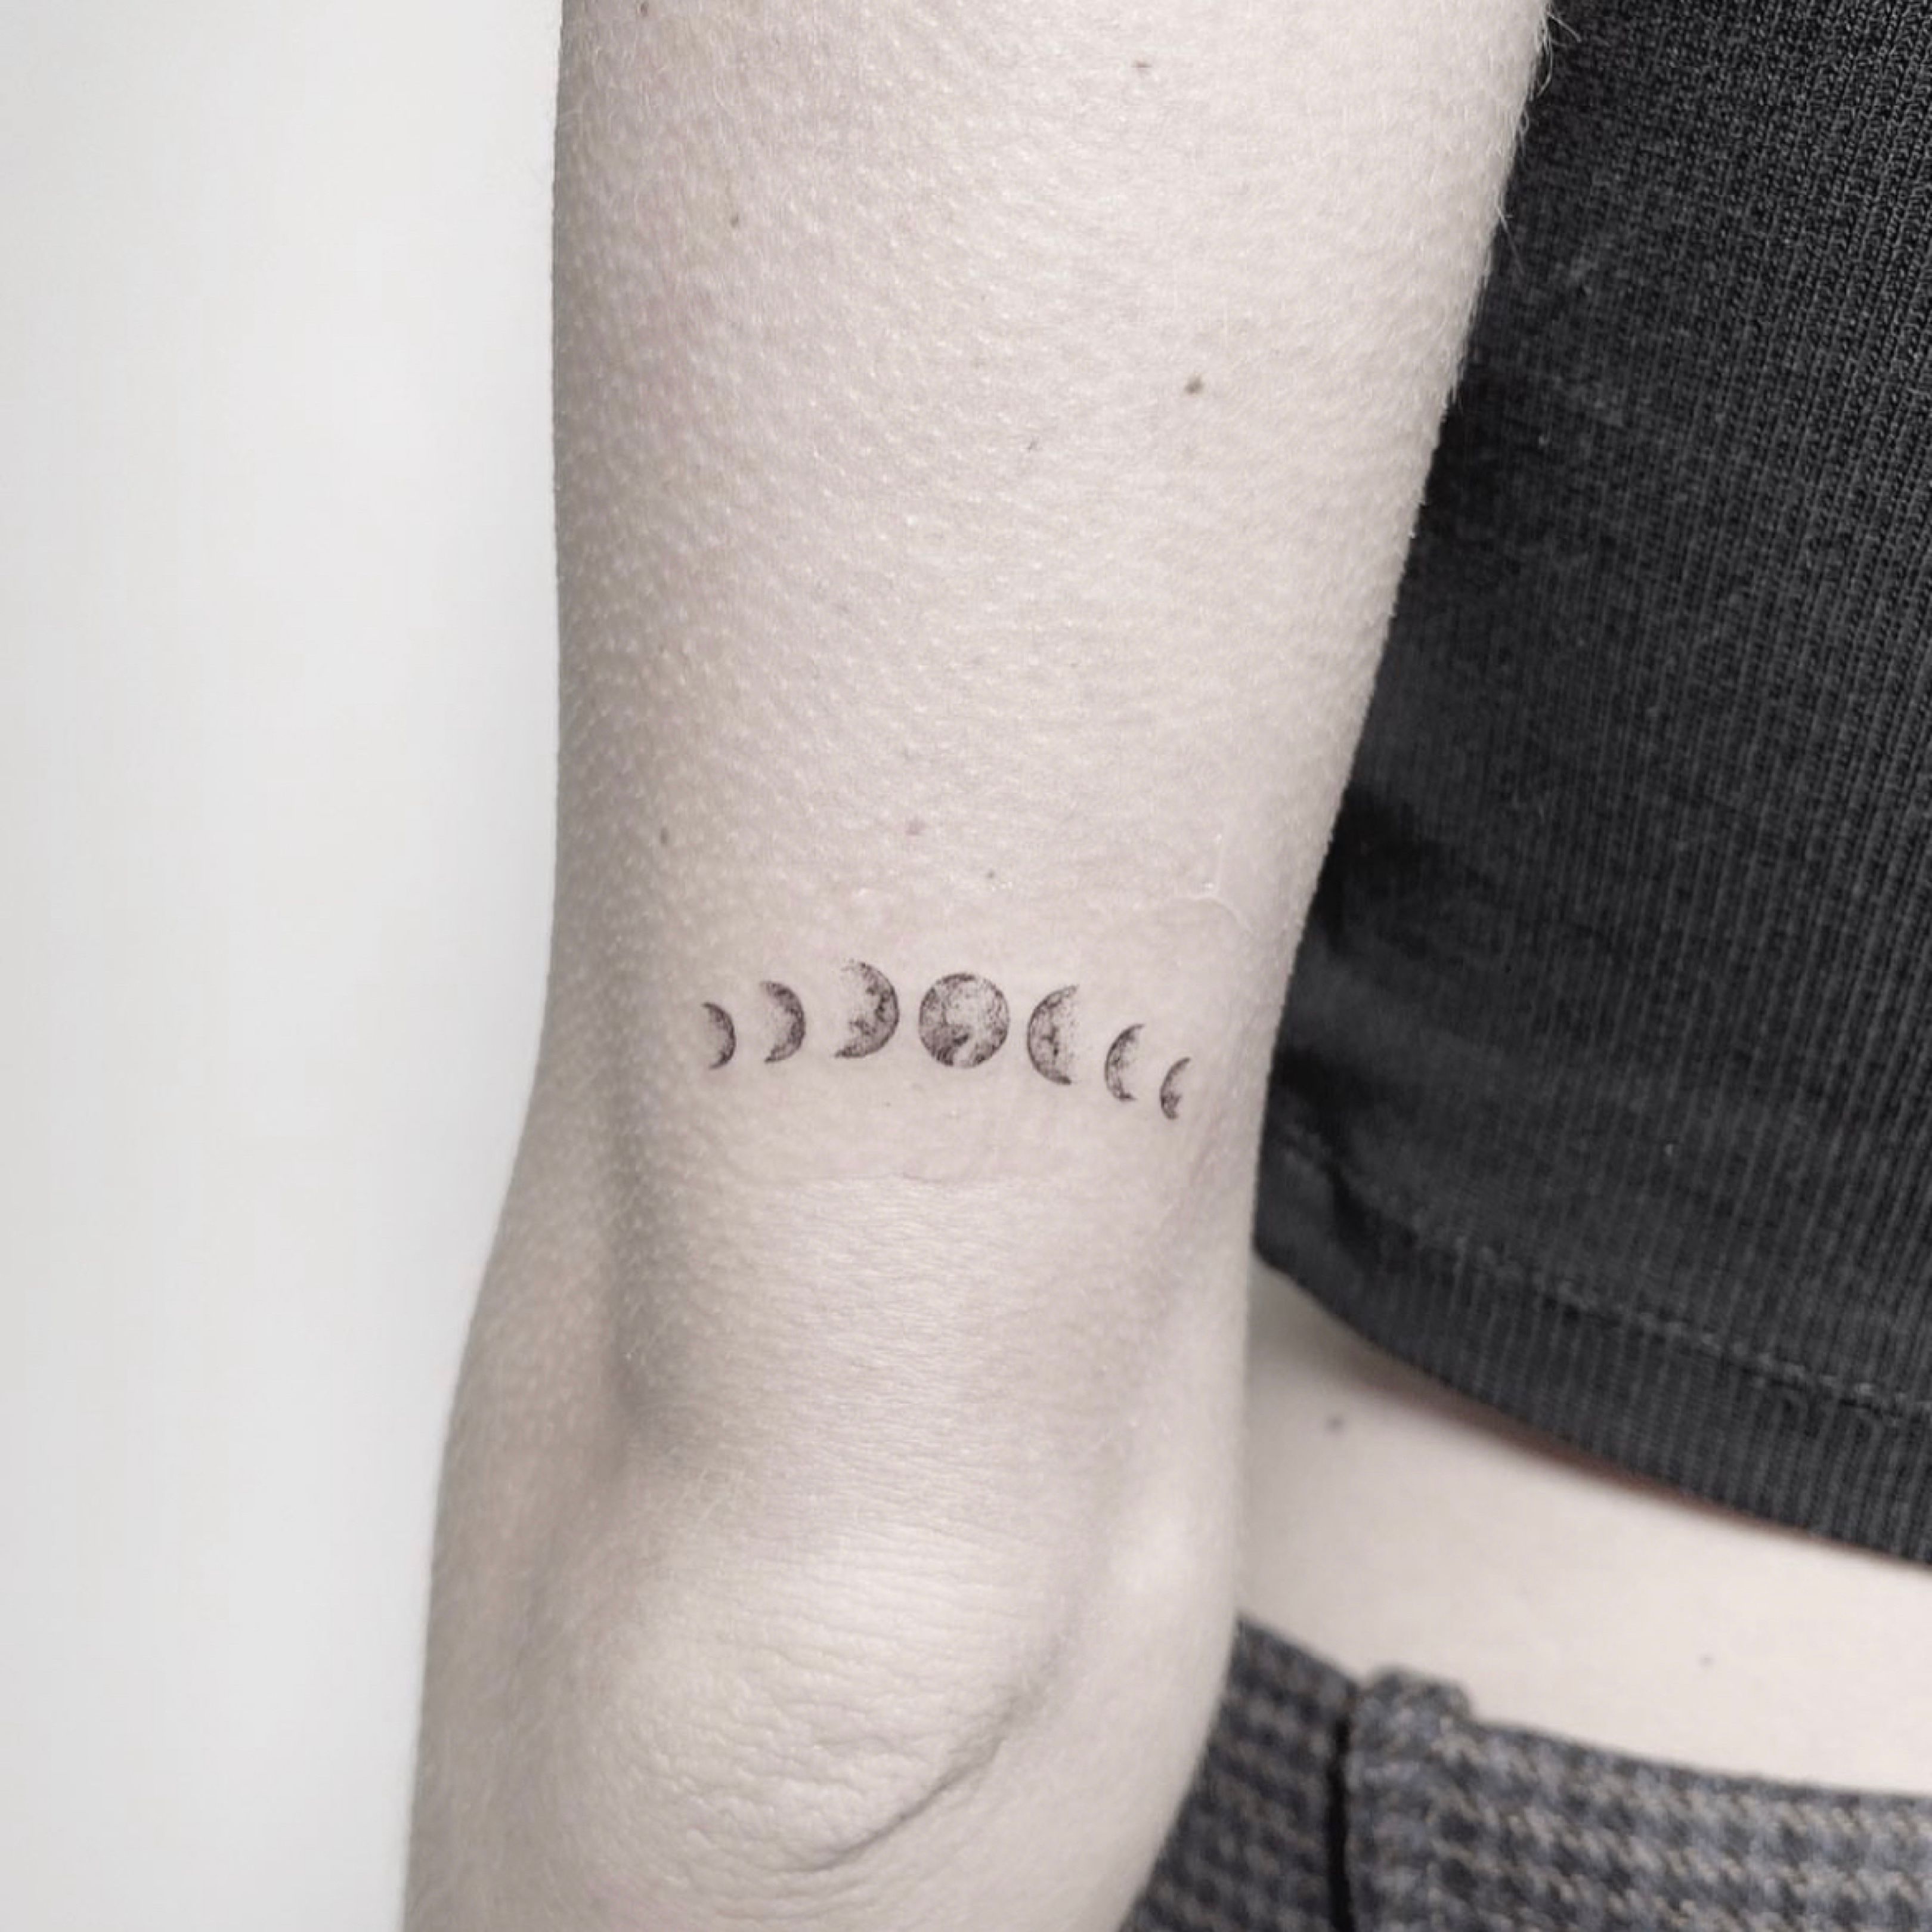 30 Meaningful Moon Tattoos  Moon Phase Tattoo Ideas  YourTango